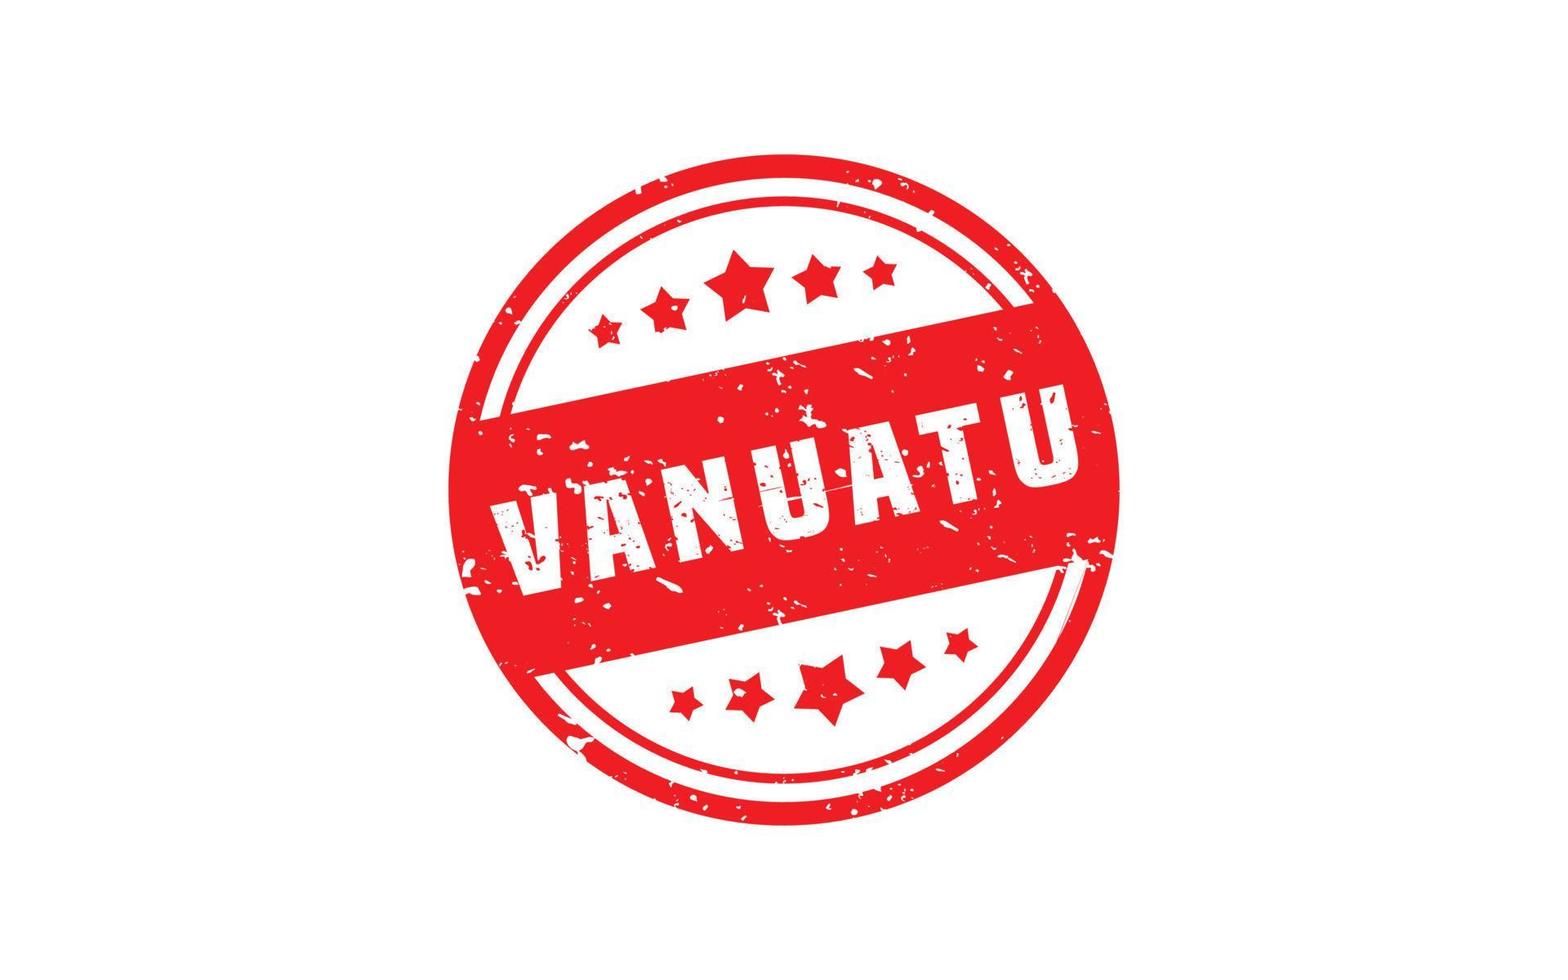 vanuatu stämpel sudd med grunge stil på vit bakgrund vektor